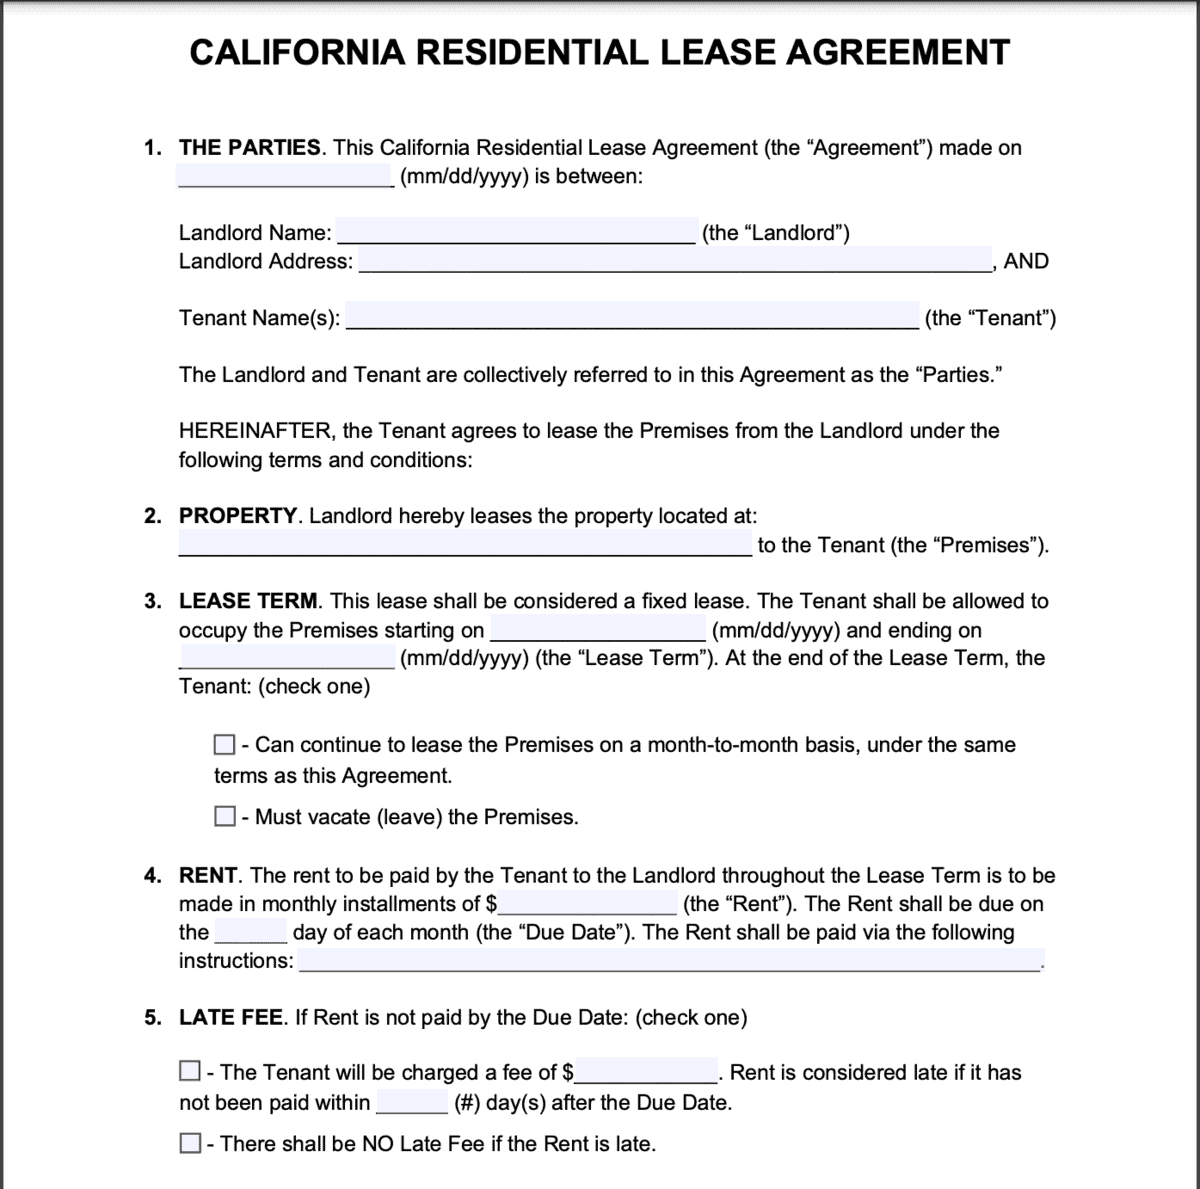 travel nurse rental lease agreement example